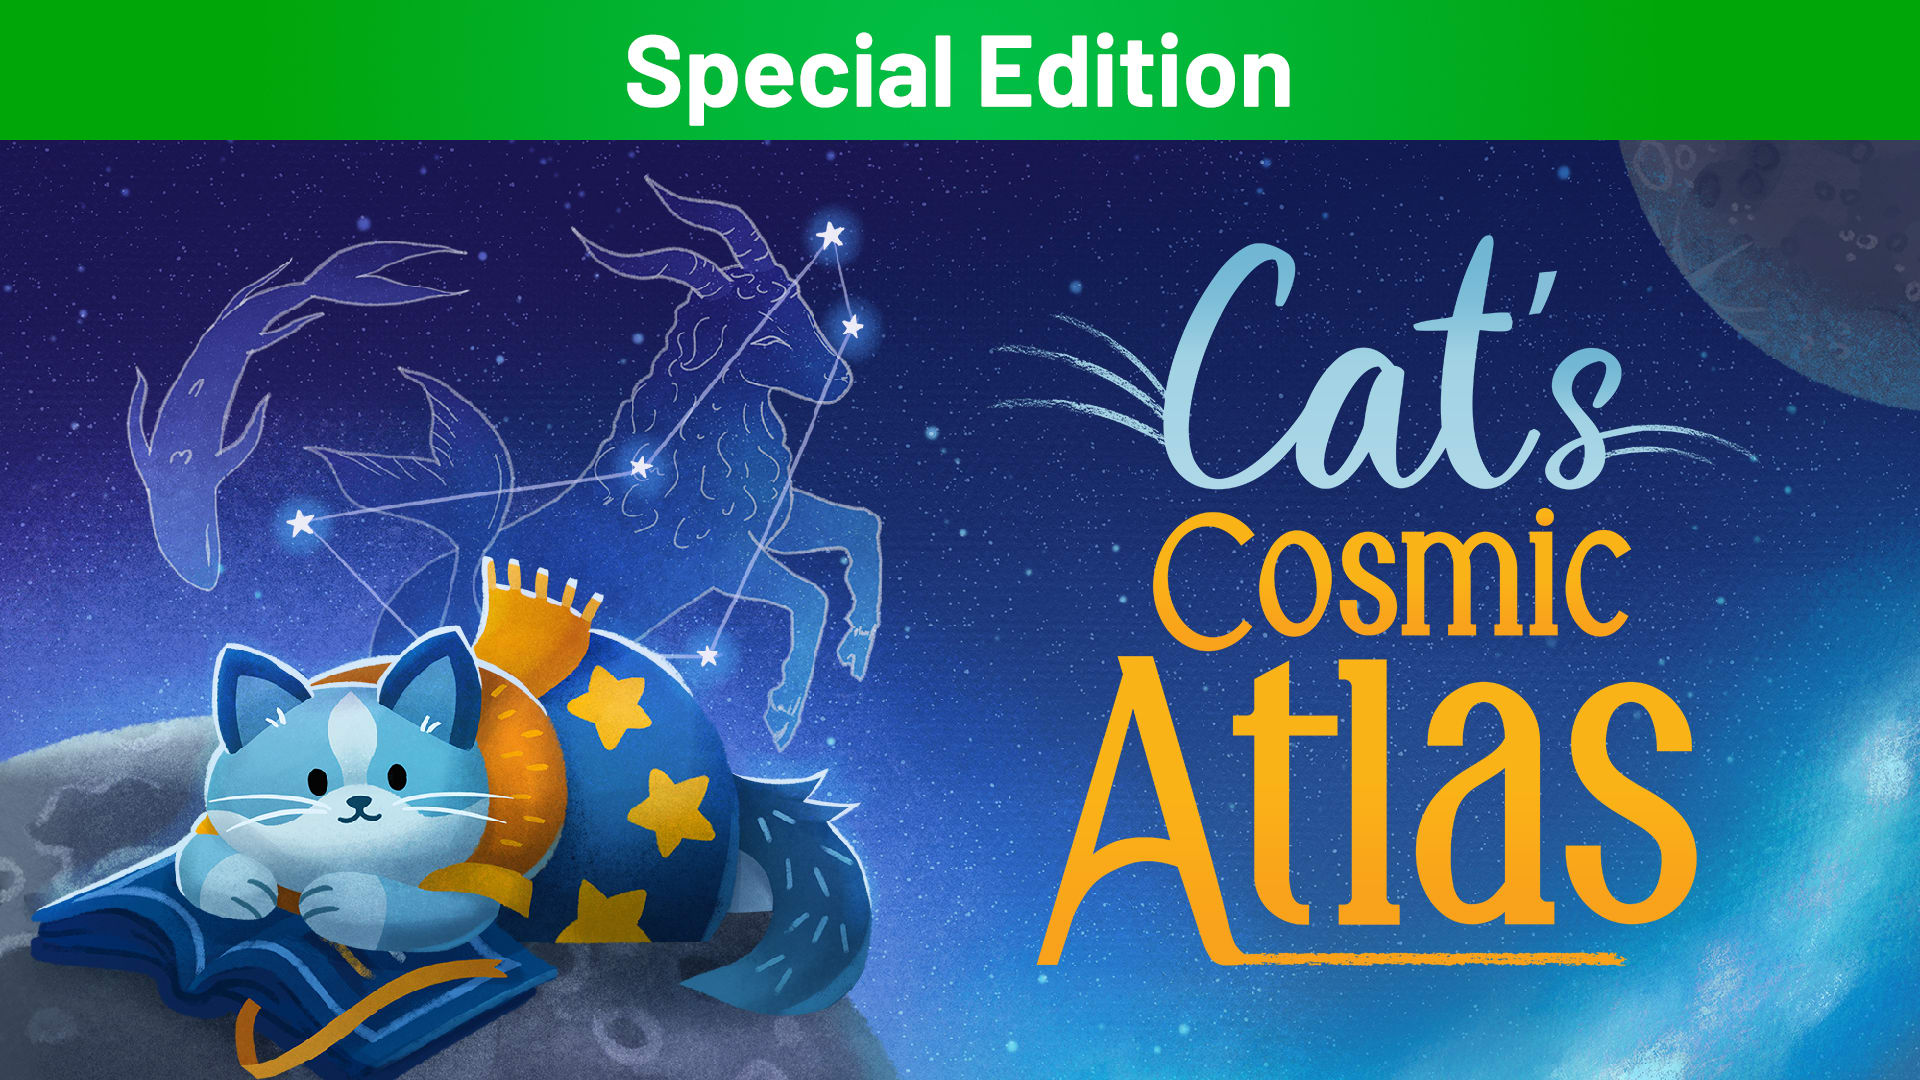 Cat's Cosmic Atlas Special Edition